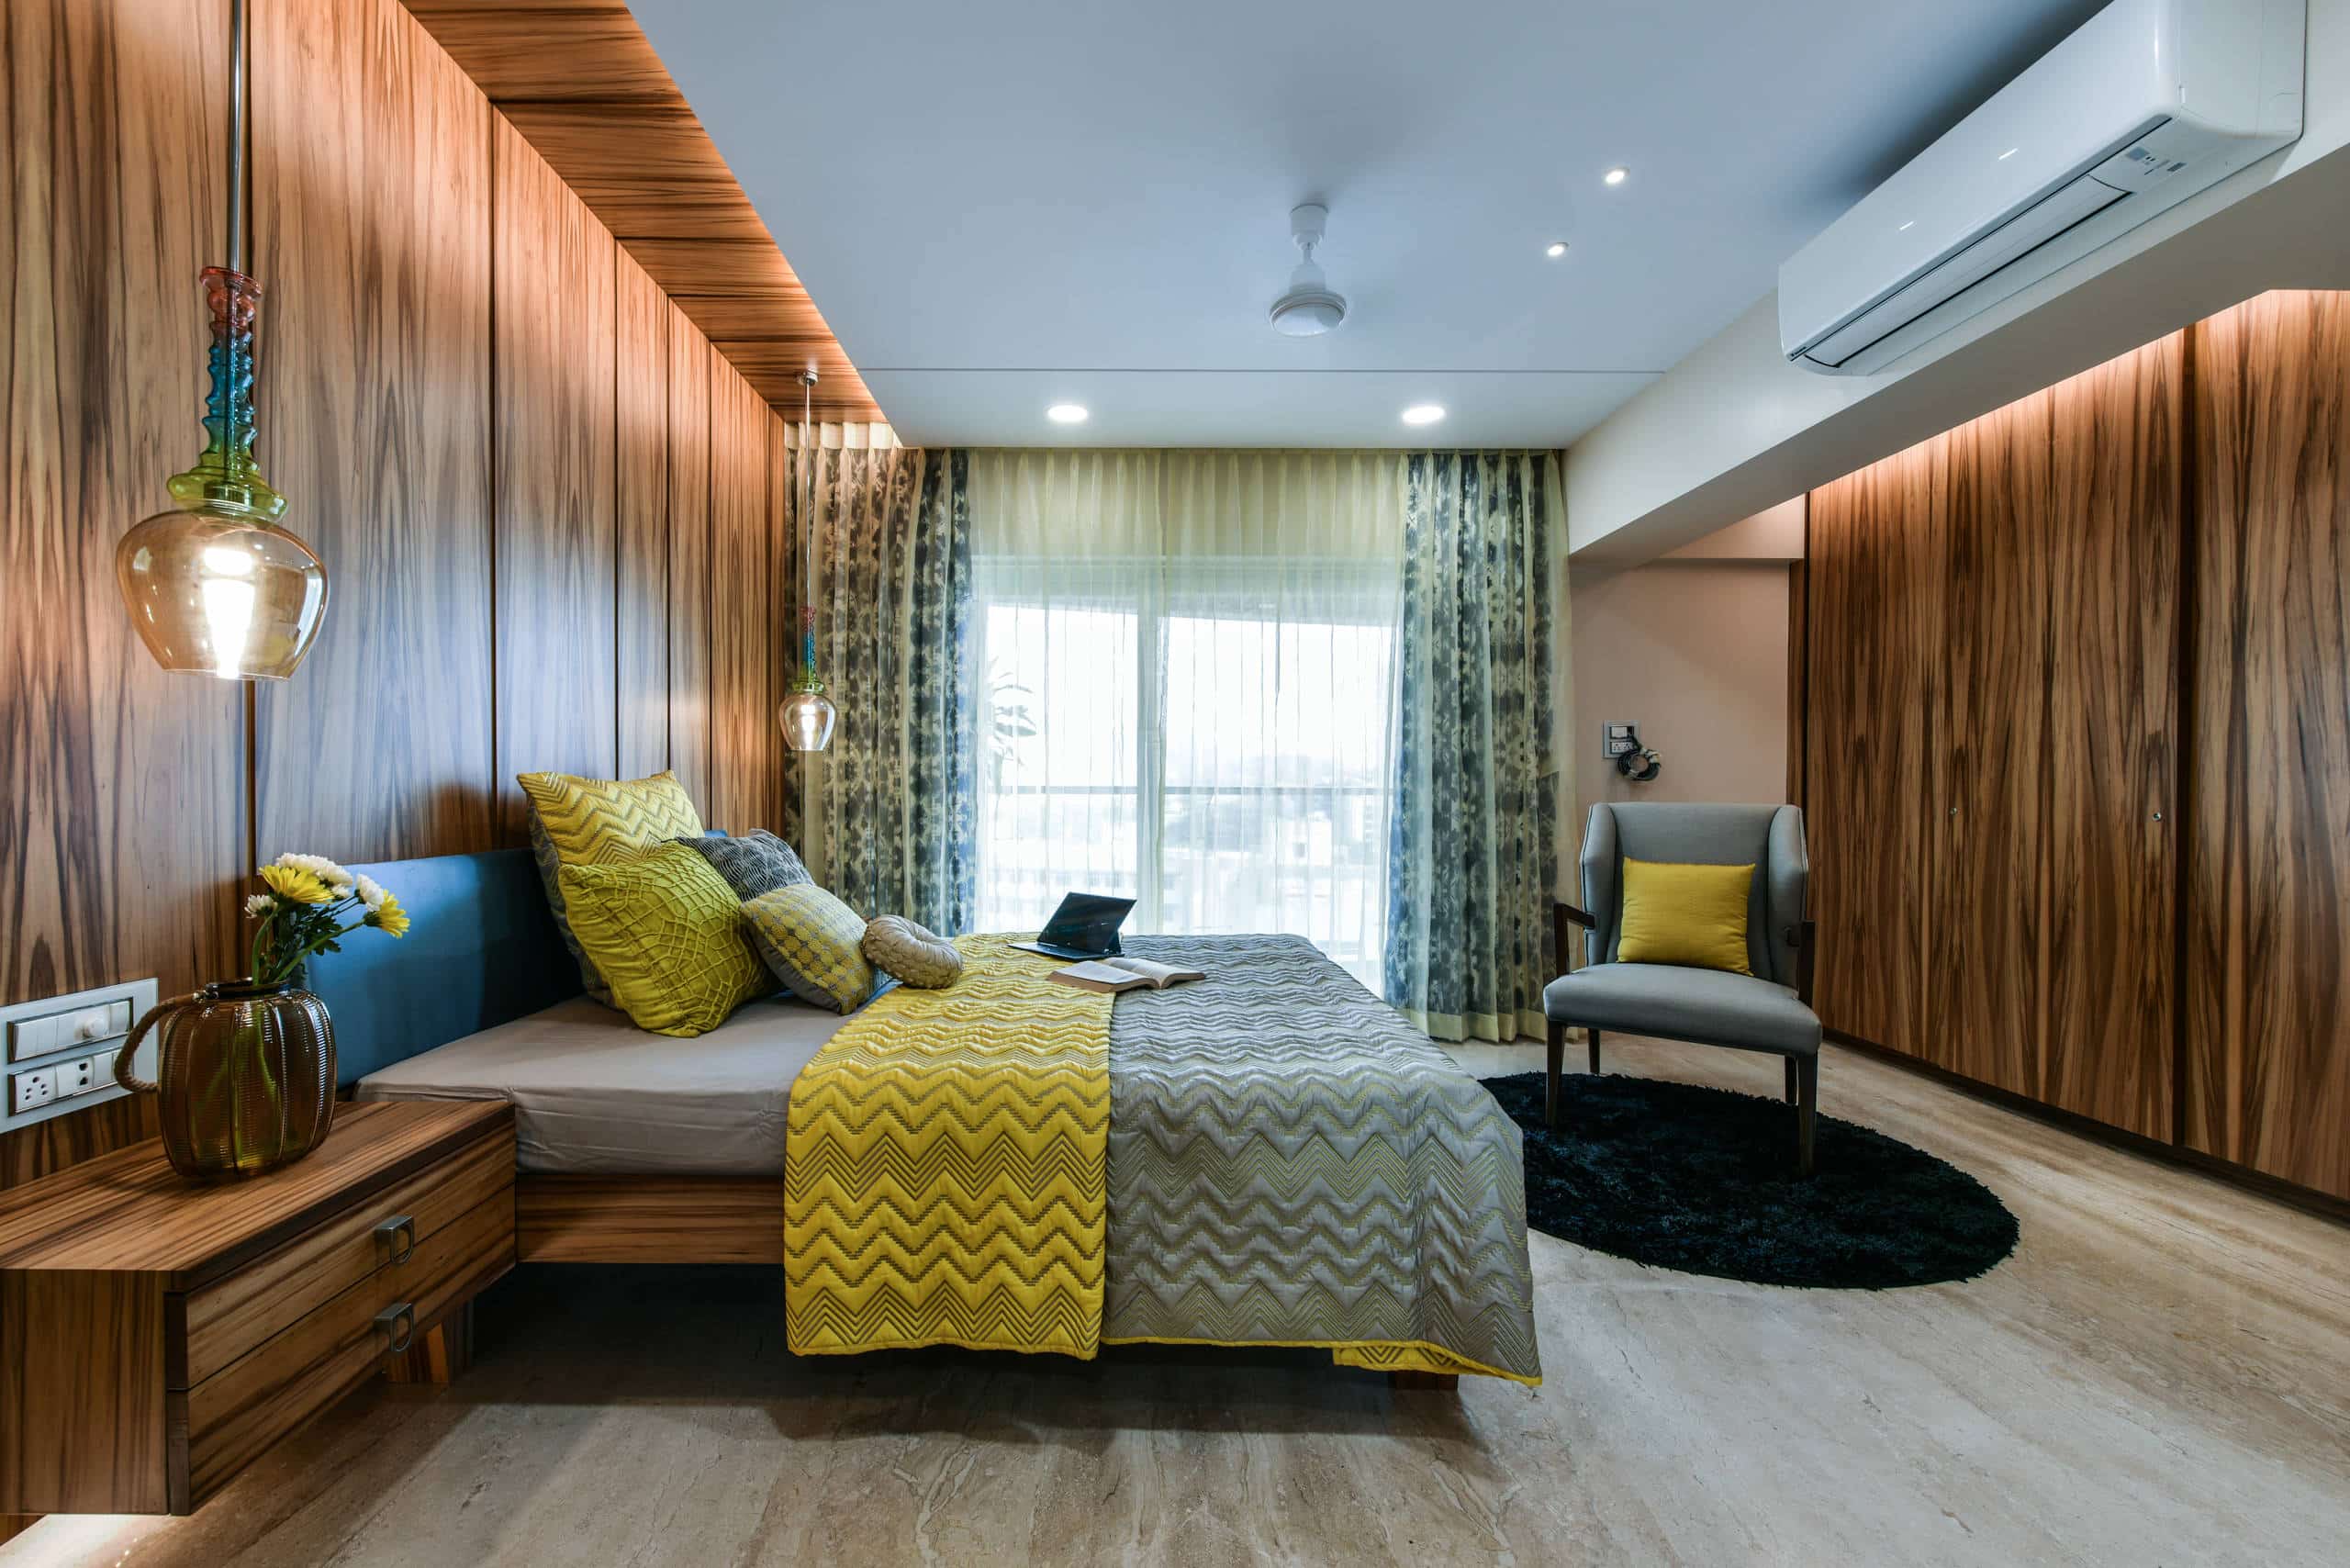 Indian Traditional Bedroom Interior Design - Indian bedroom interior